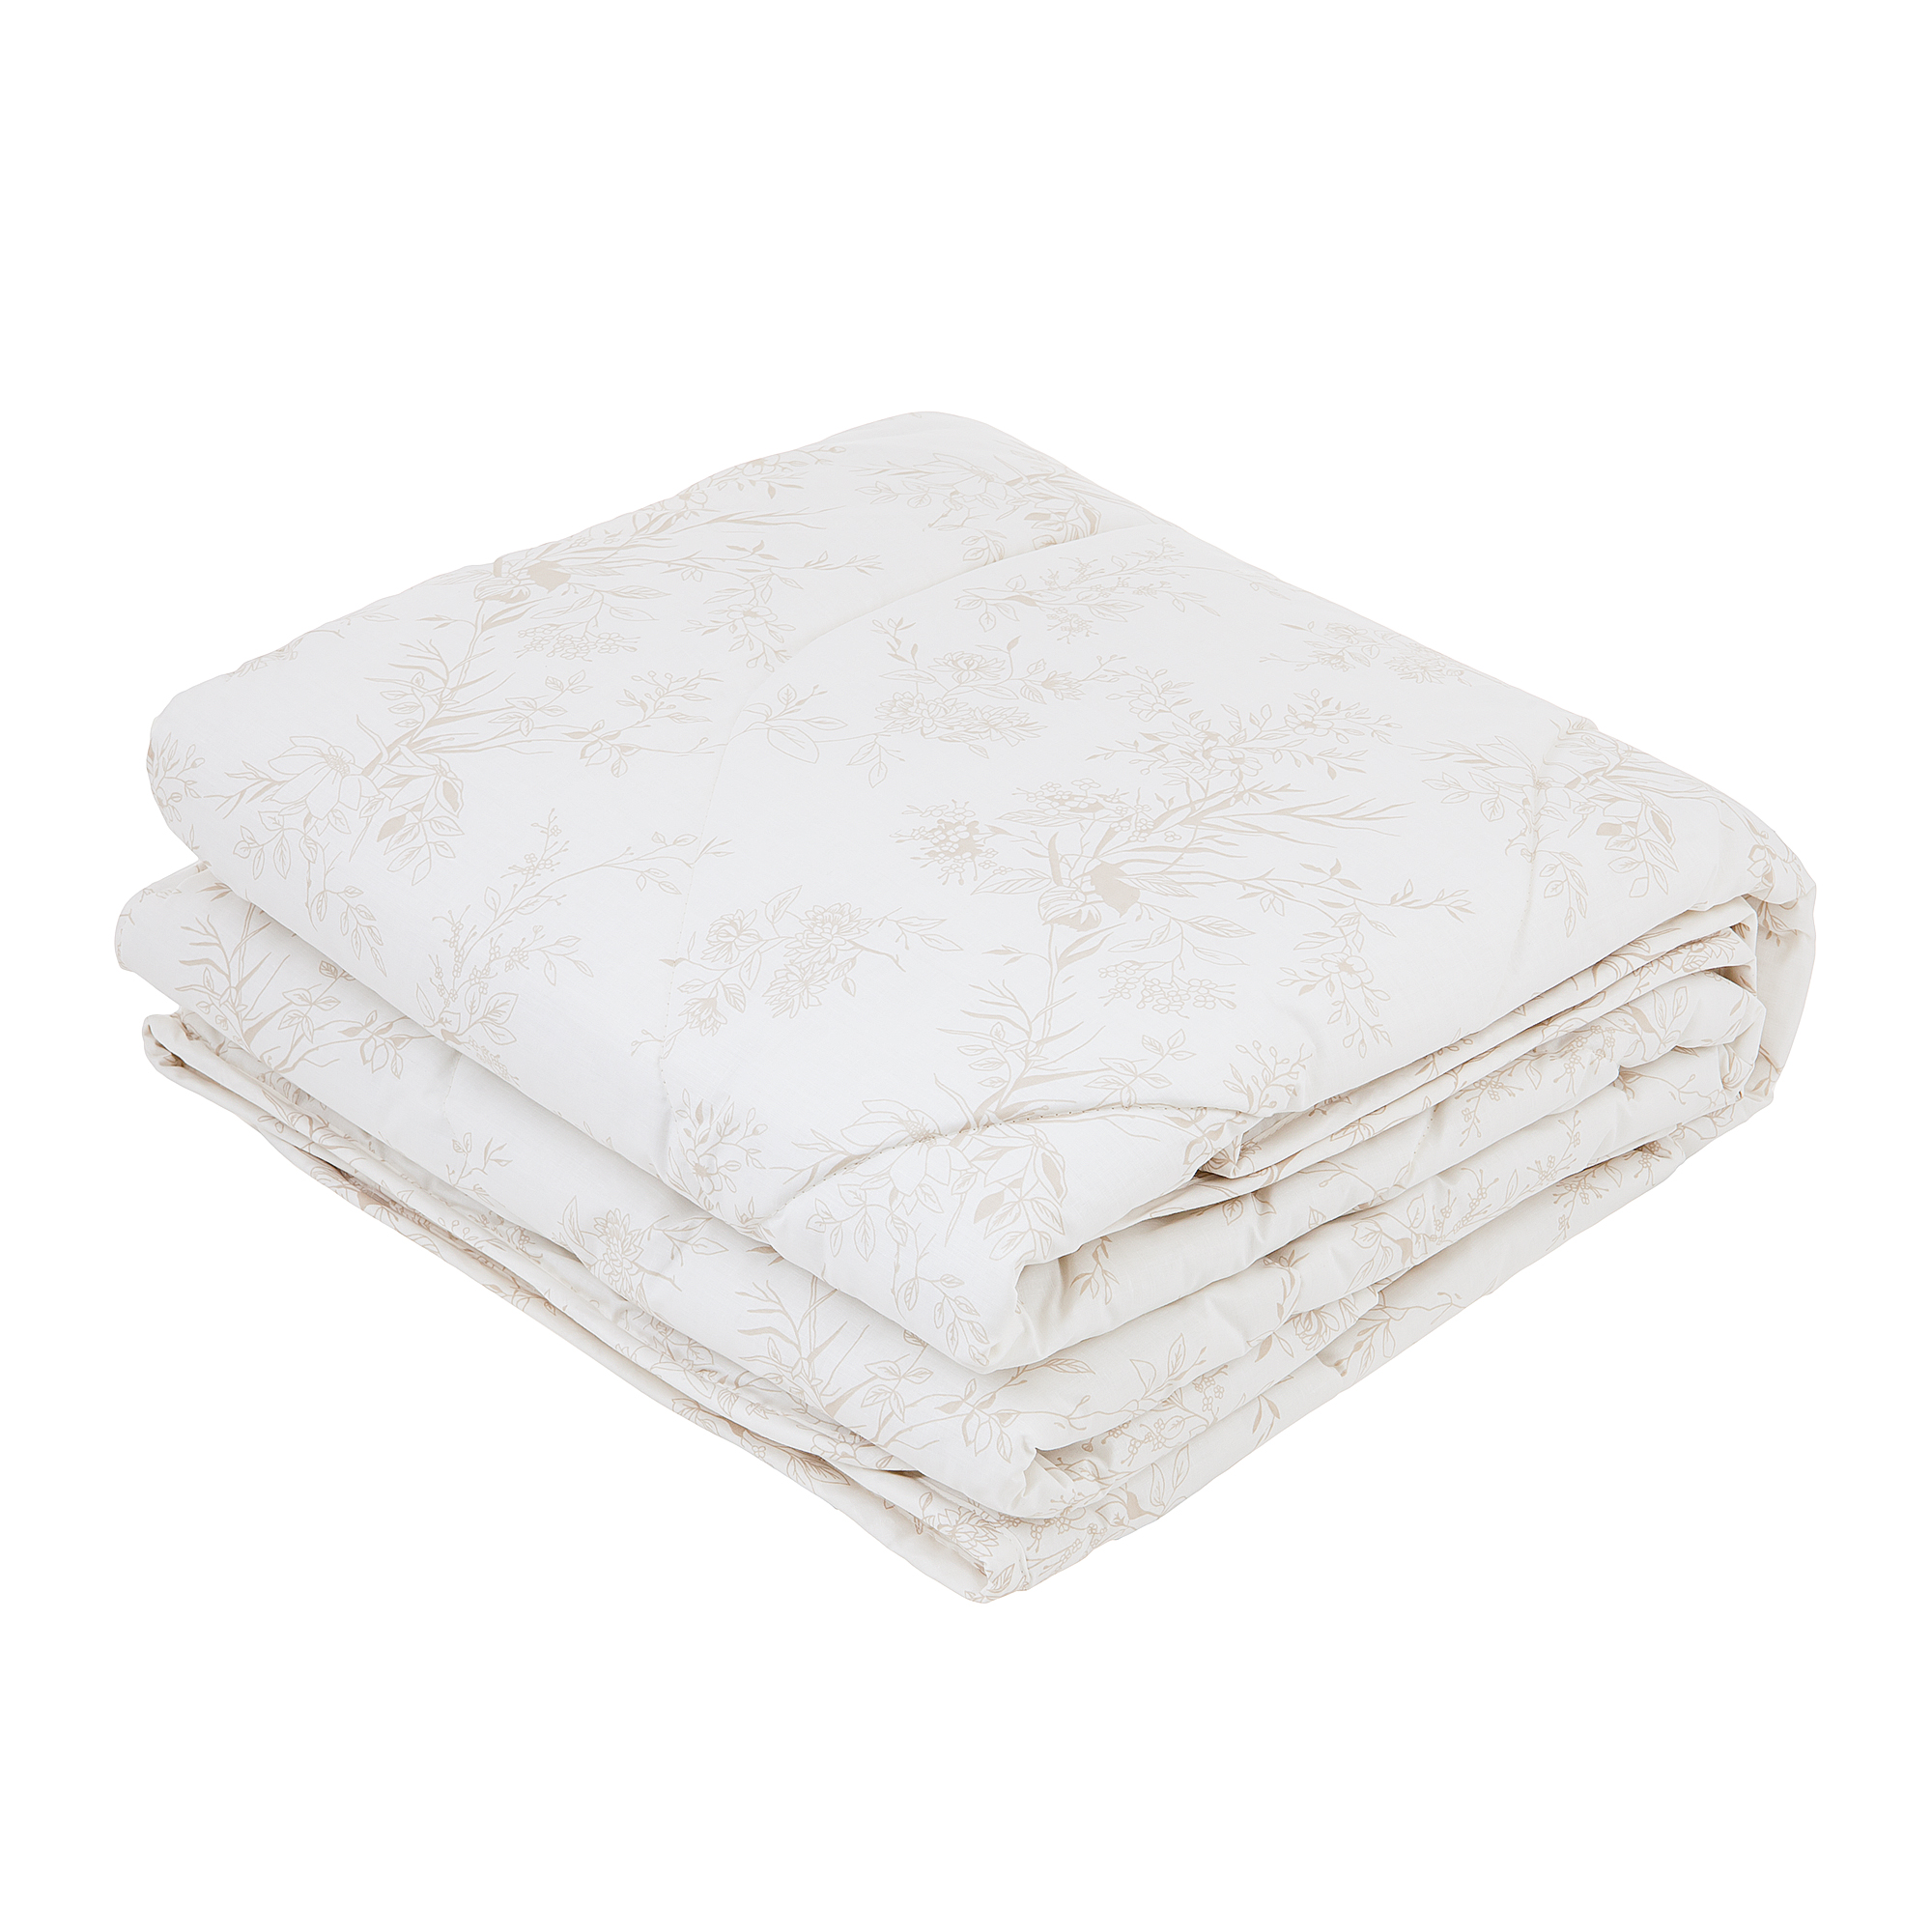 Одеяло Classic by T Хлопок-натурэль 200х210 одеяло среднее estia фальтерона 200х210 см